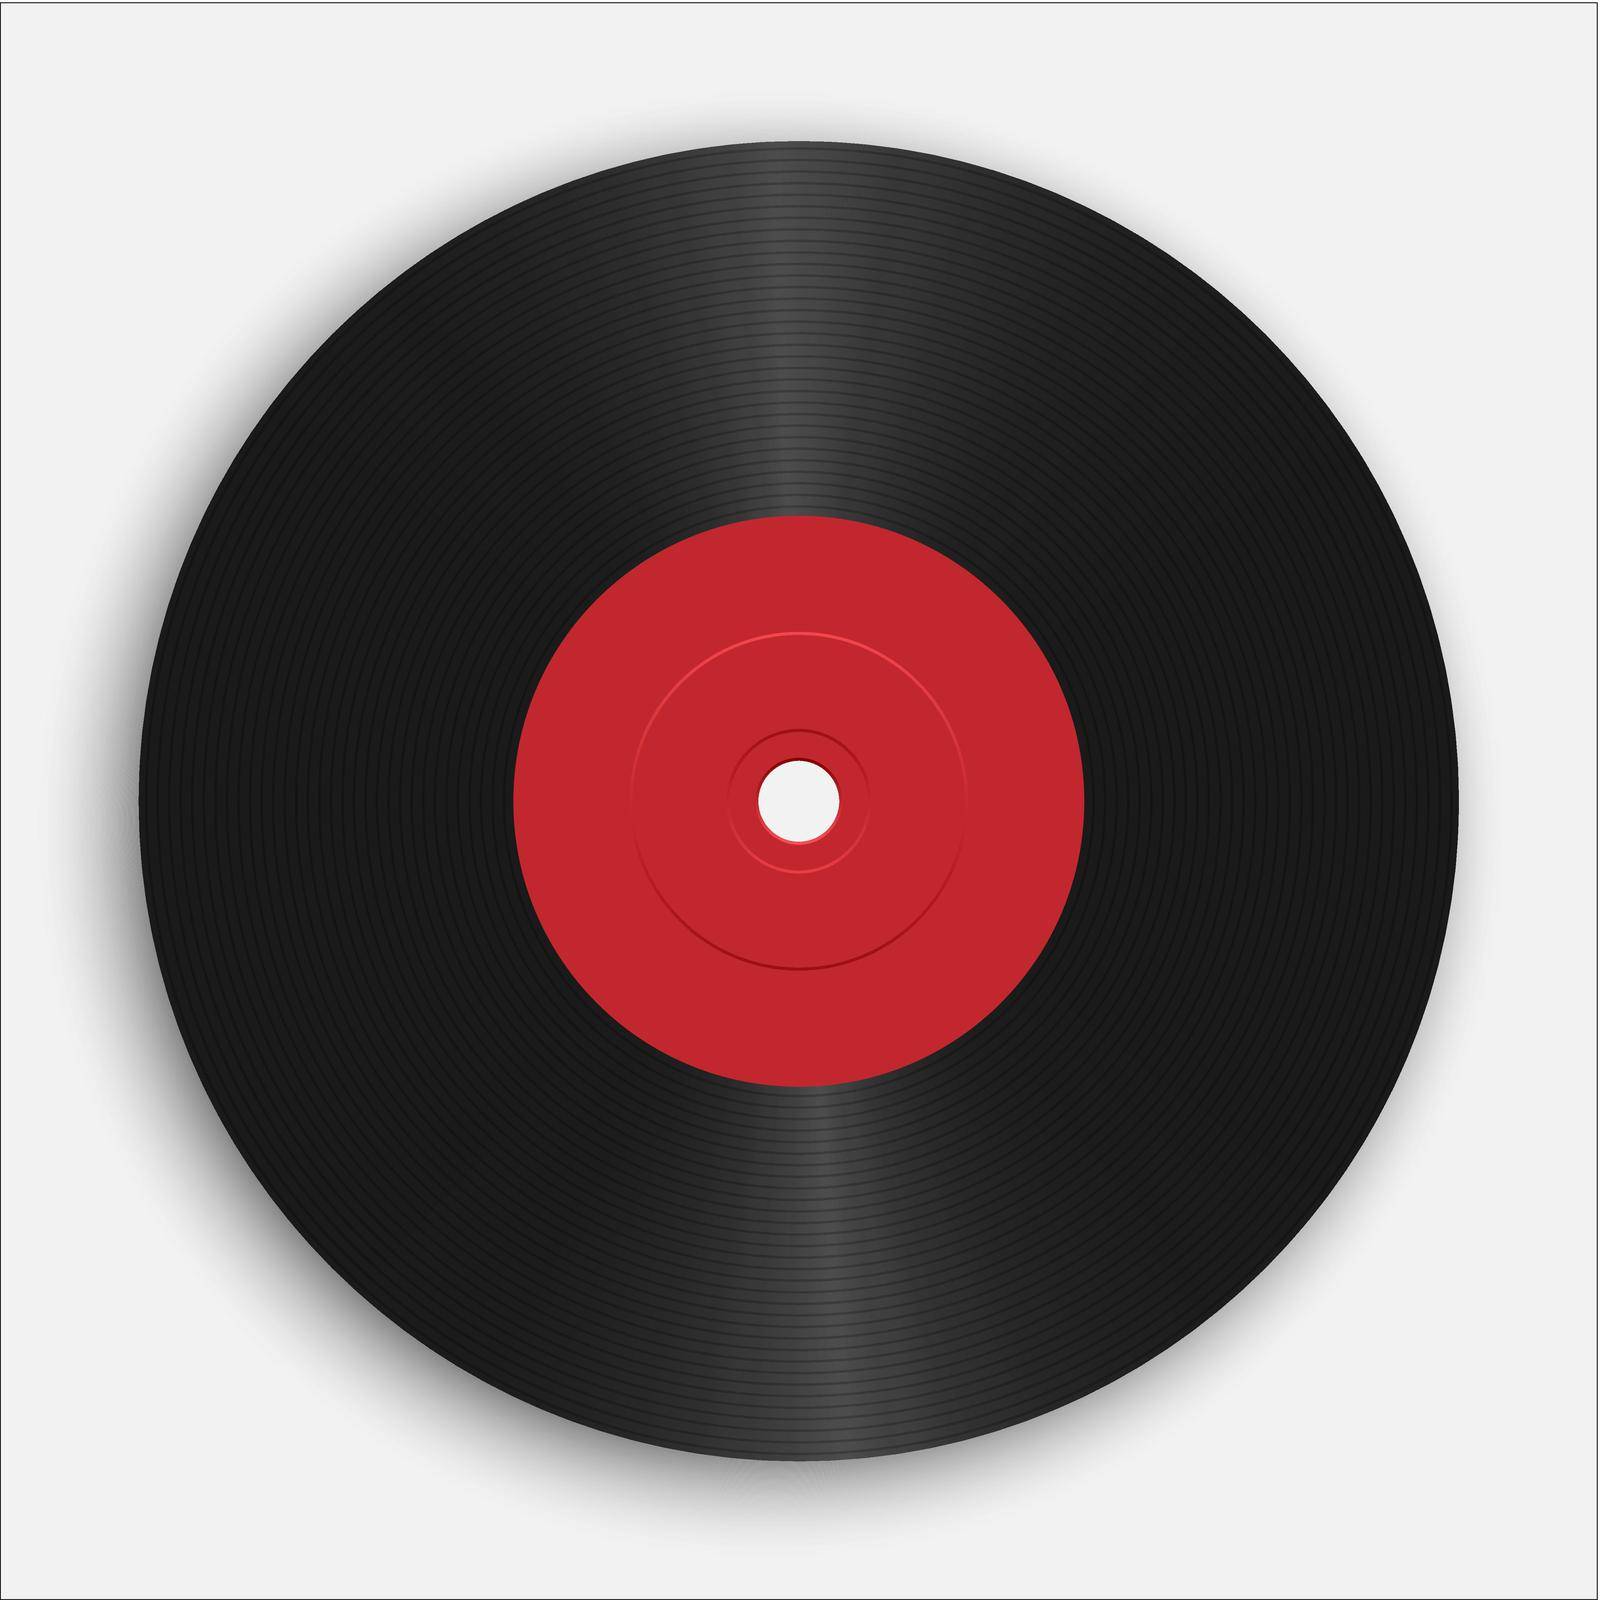 Realistic gramophone or vinyl record. Audio classic plastic disc